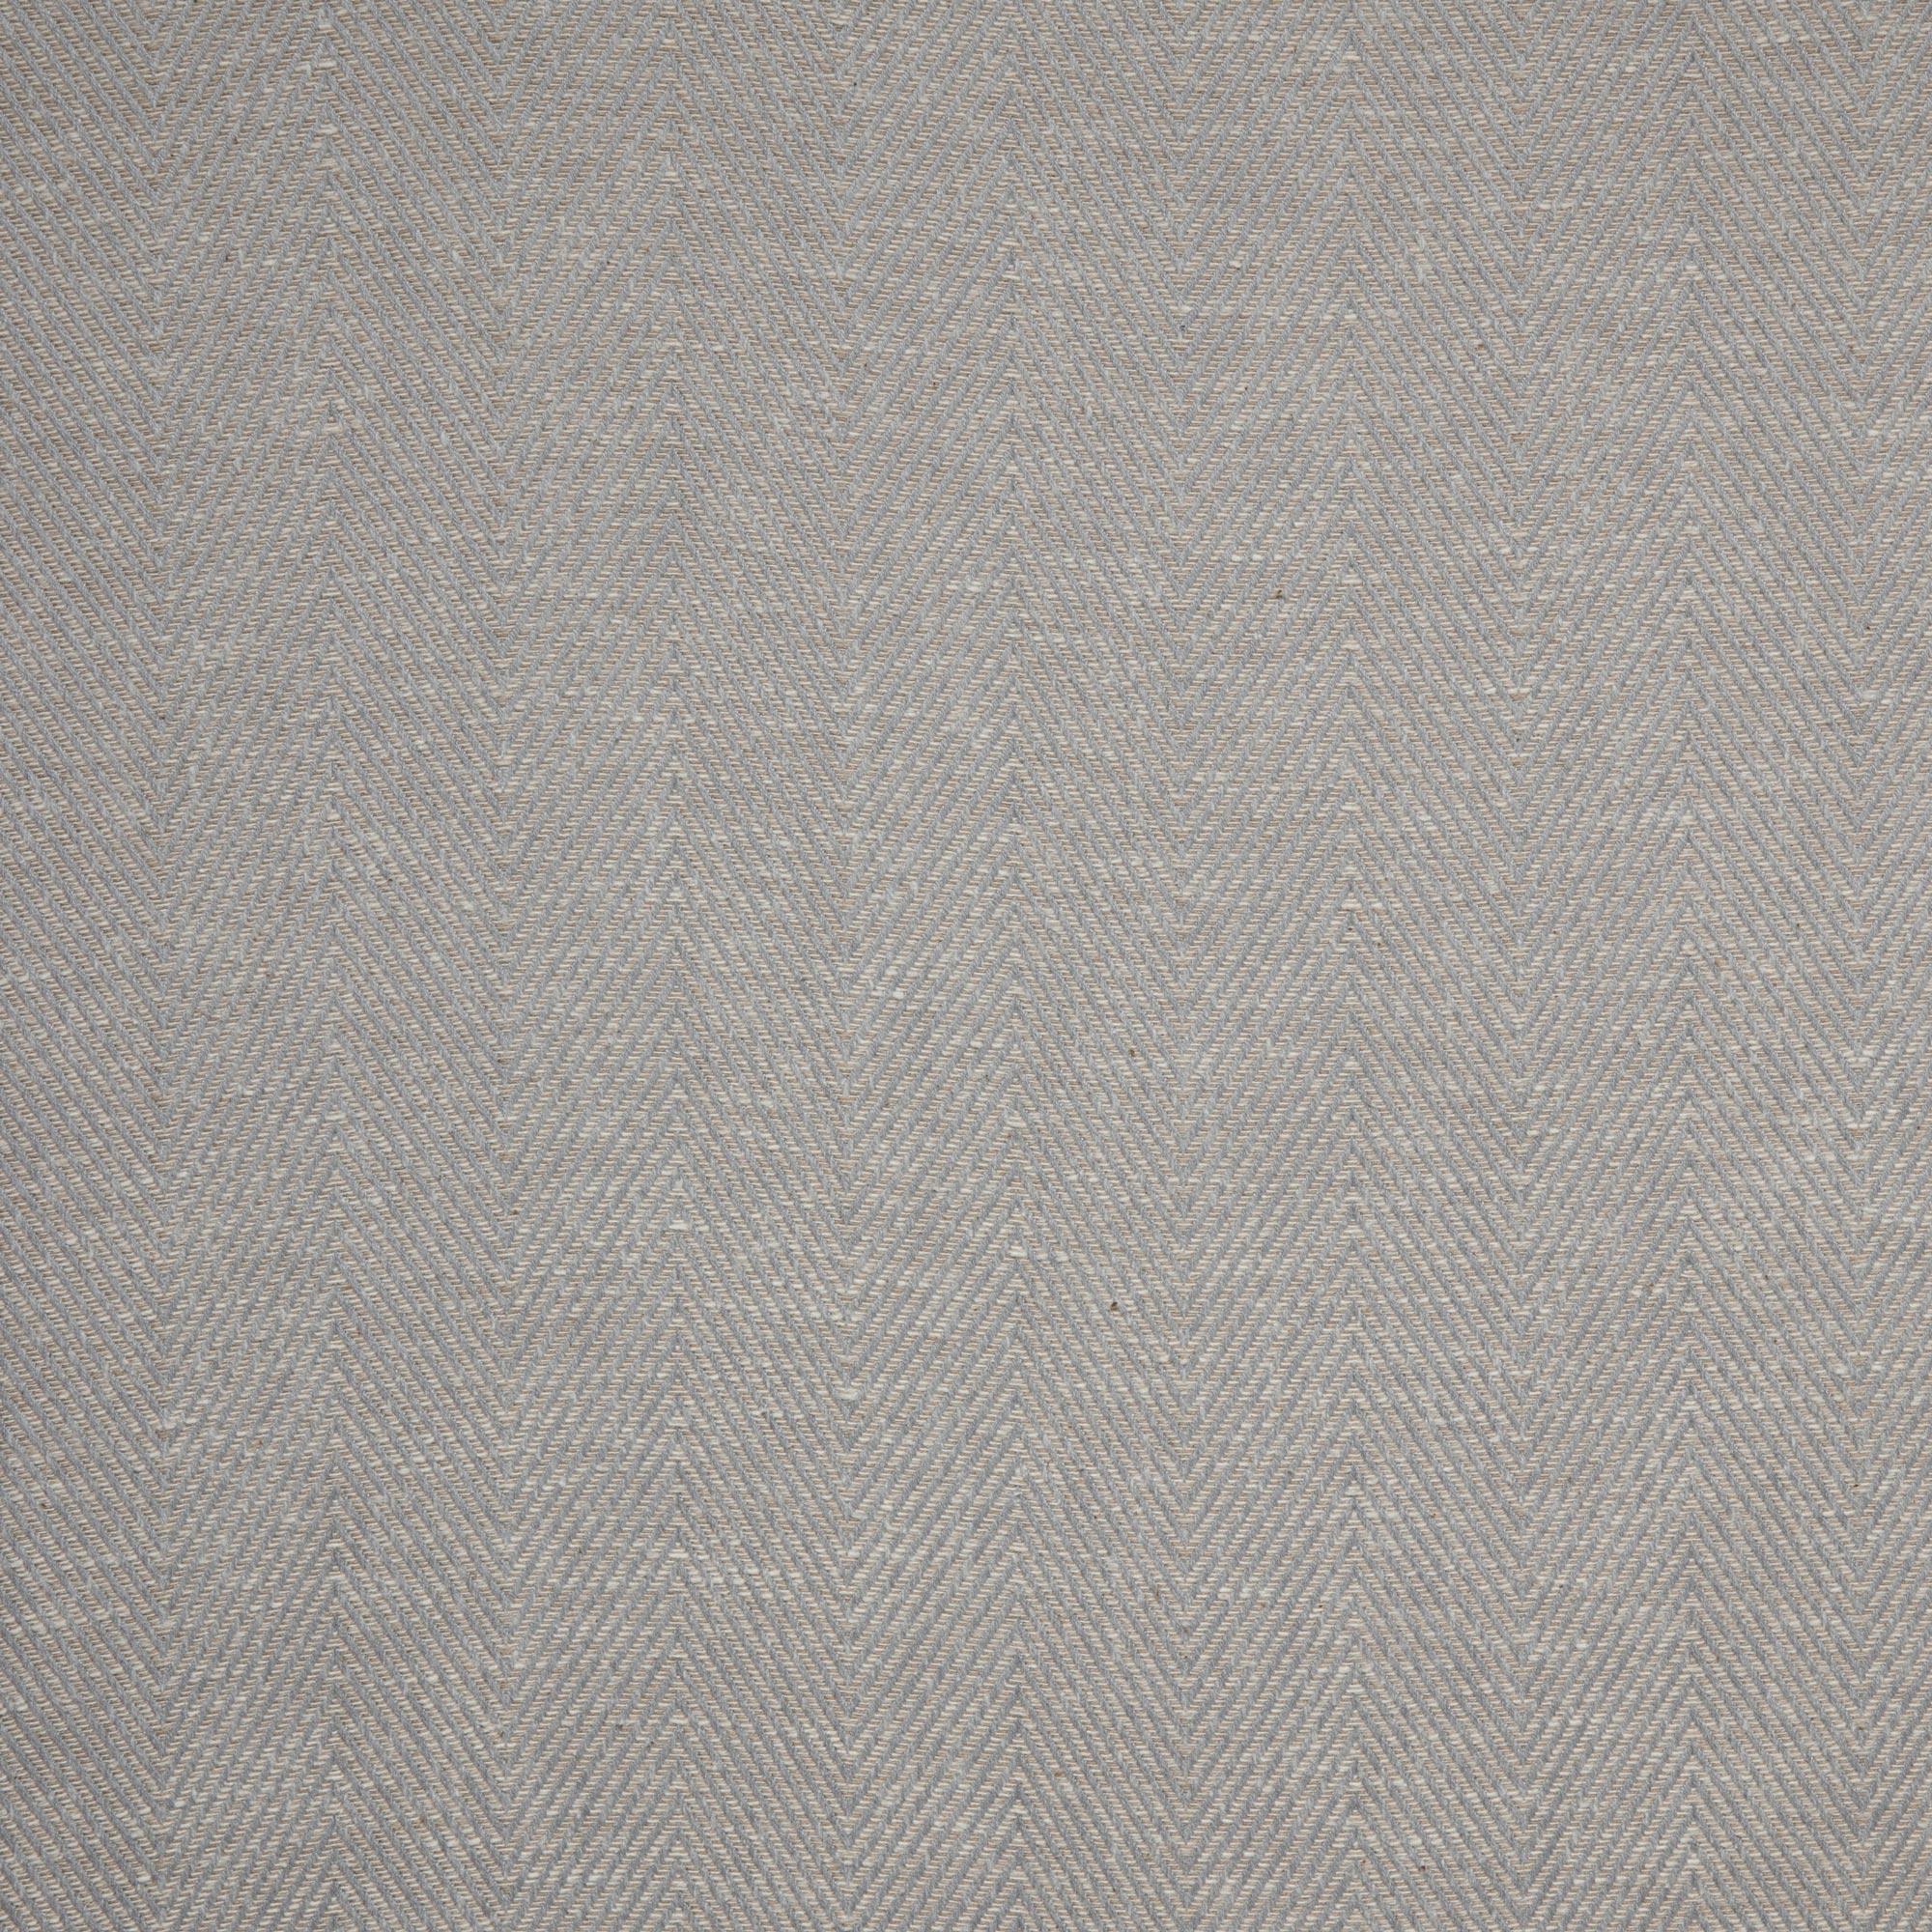 Ladakh Herringbone Upholstery Fabric - Ash Swatch 15cm x 15 cm